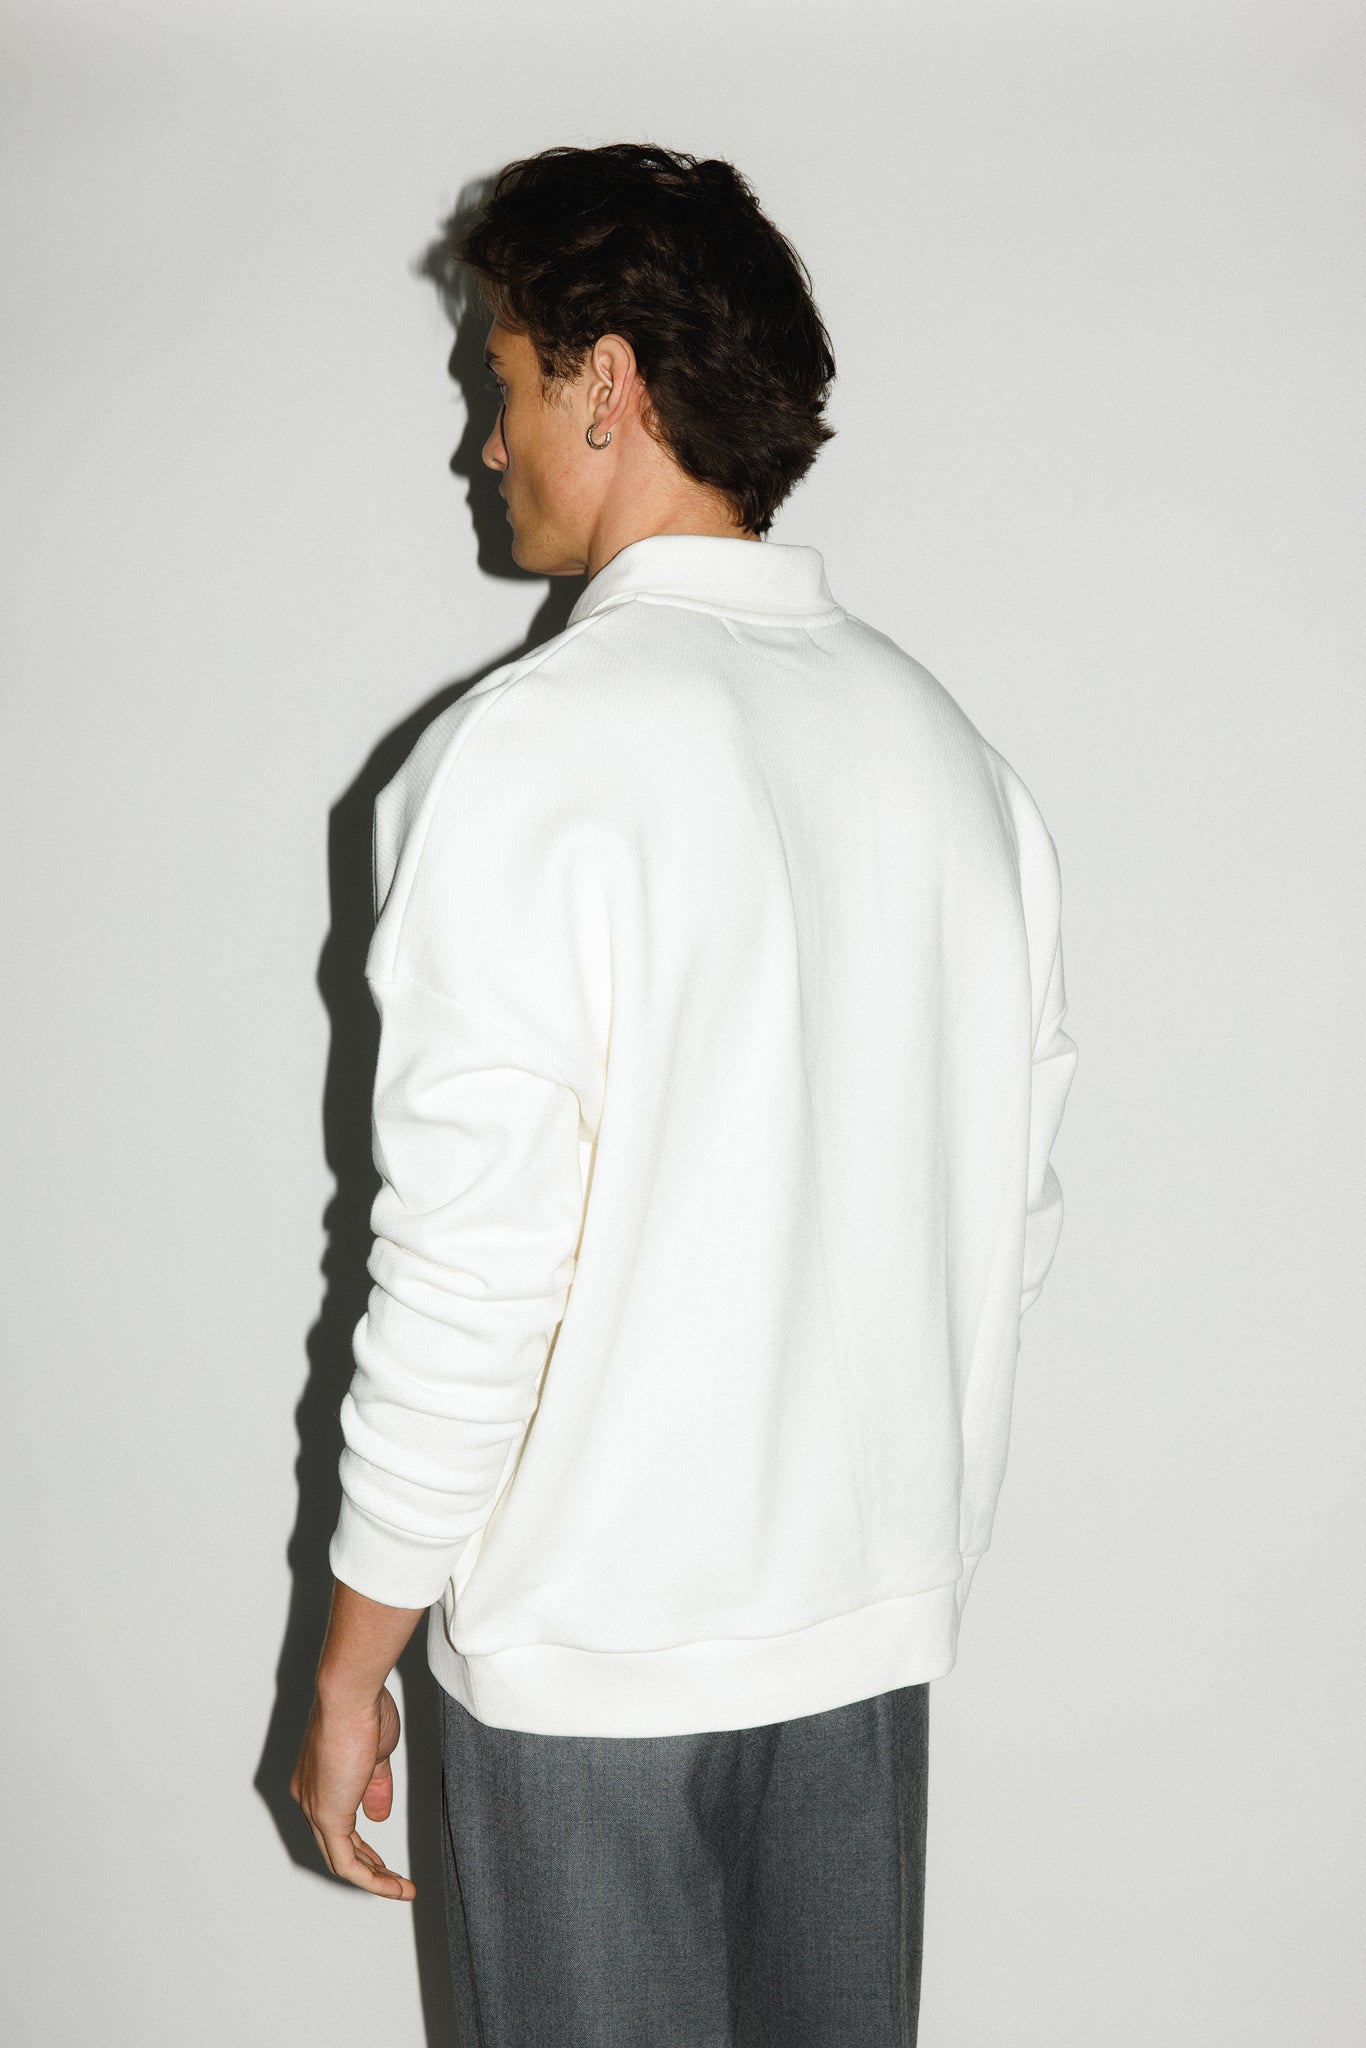 Pacific Oversized Collared Sweatshirt  |  Ivory